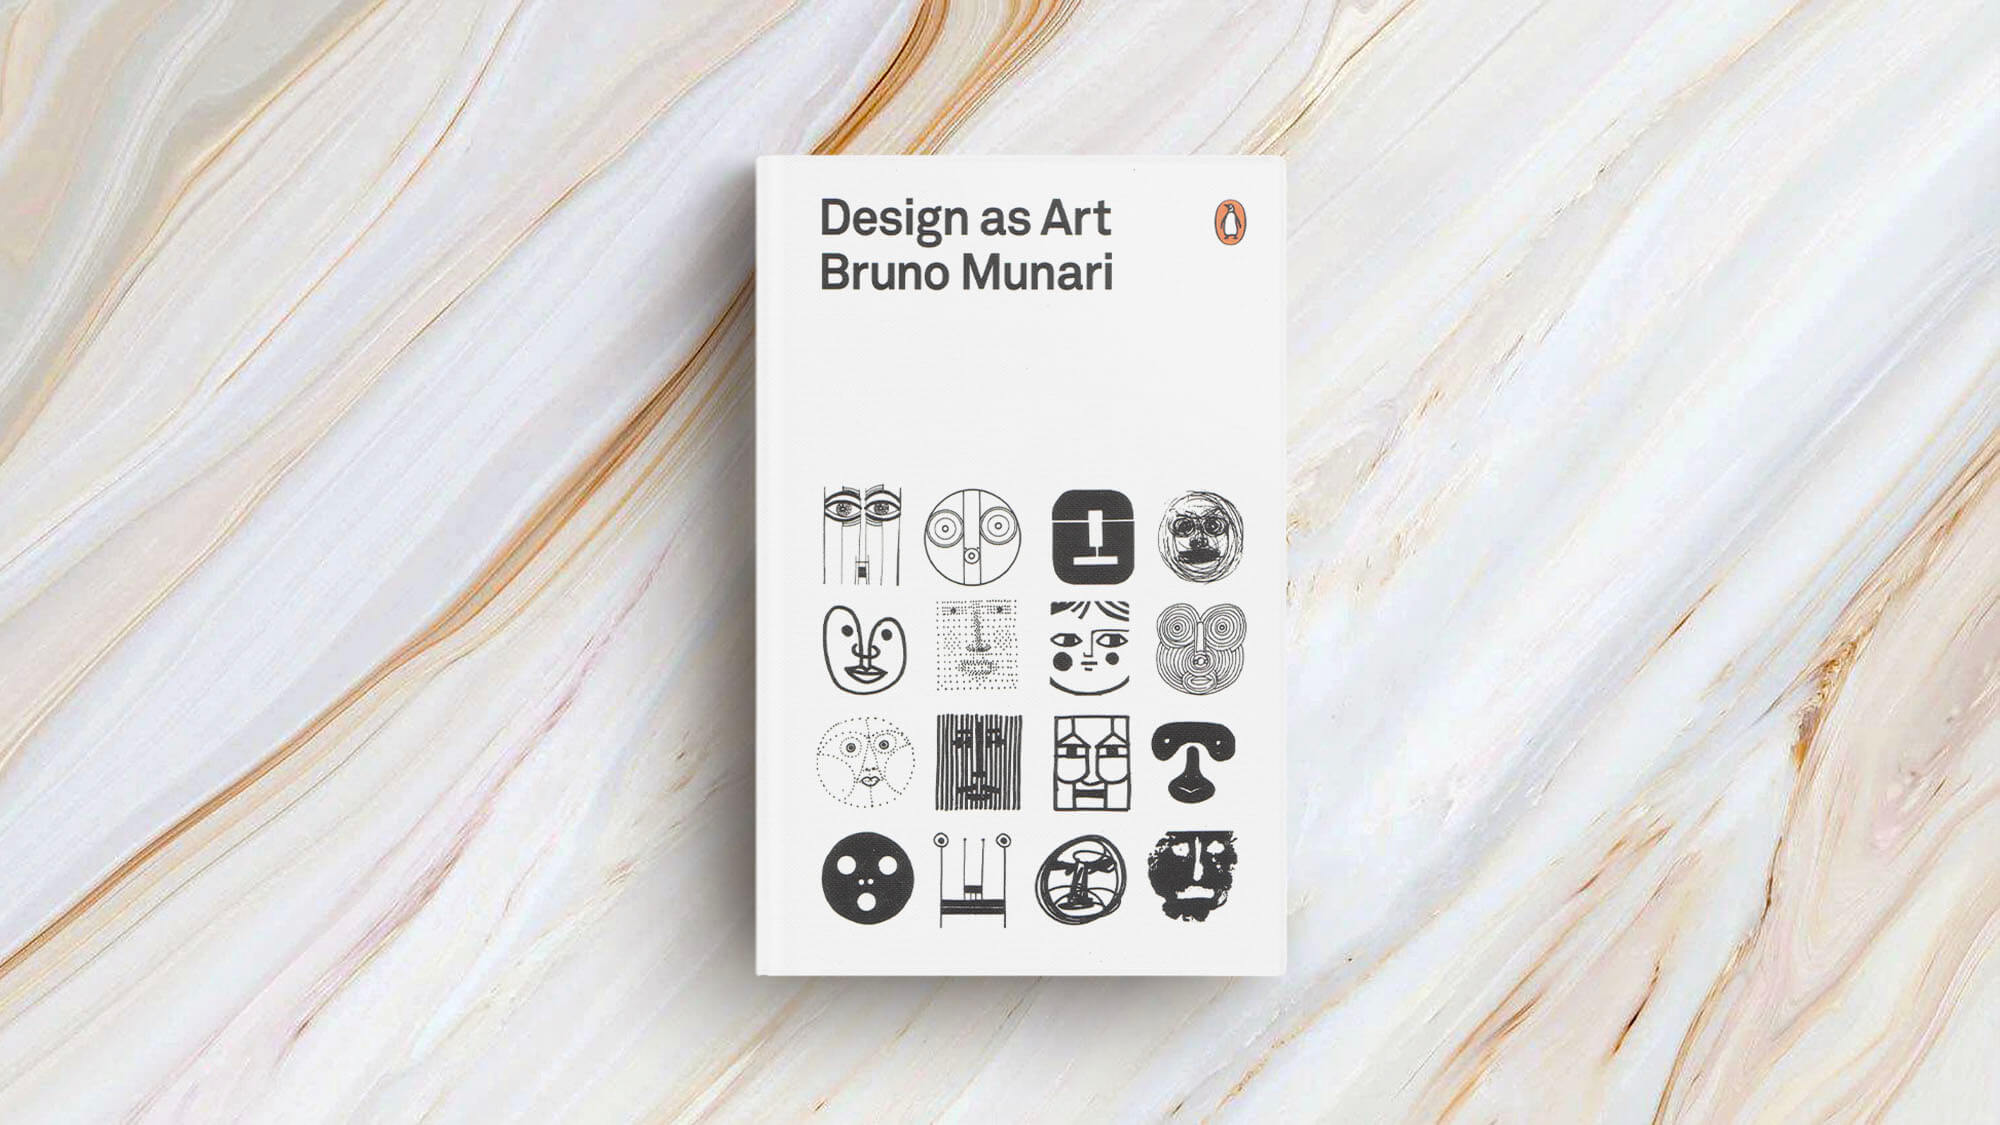 Design as art Bruno Munari, book review by Giuseppe Gallo